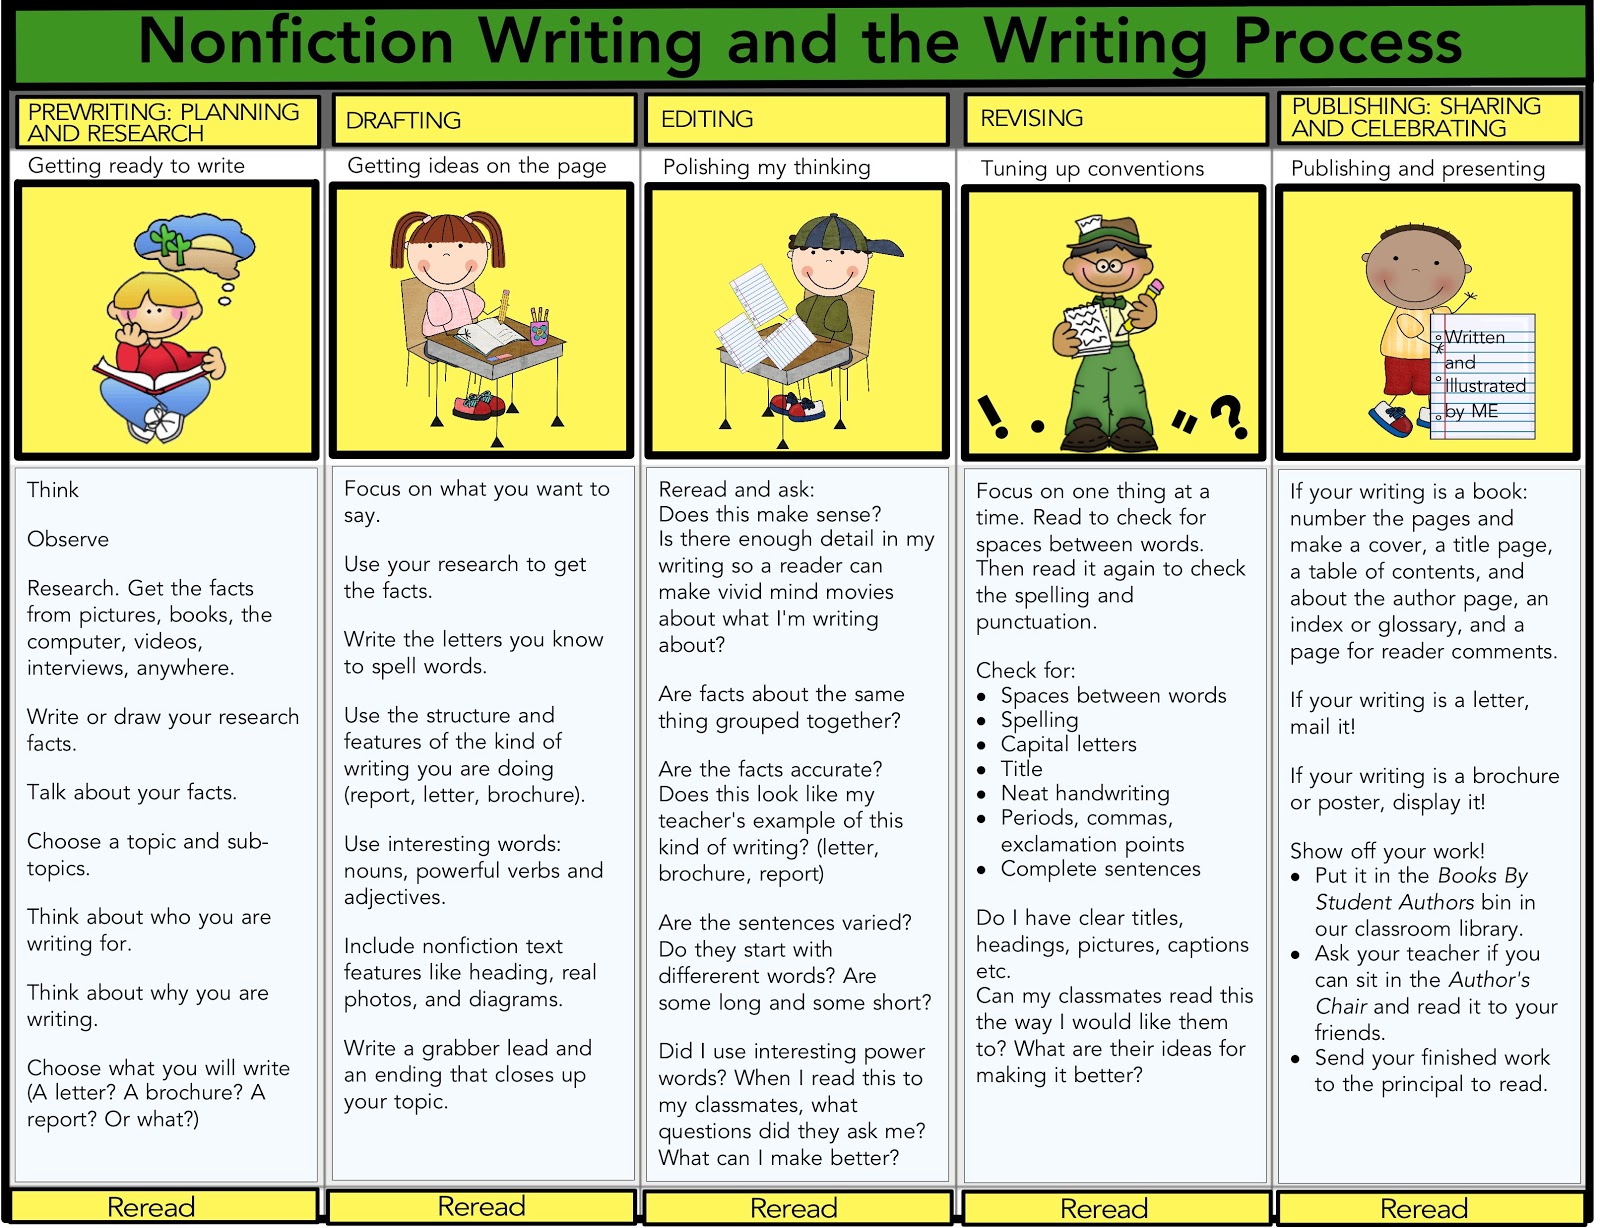 Steps to write a fiction book